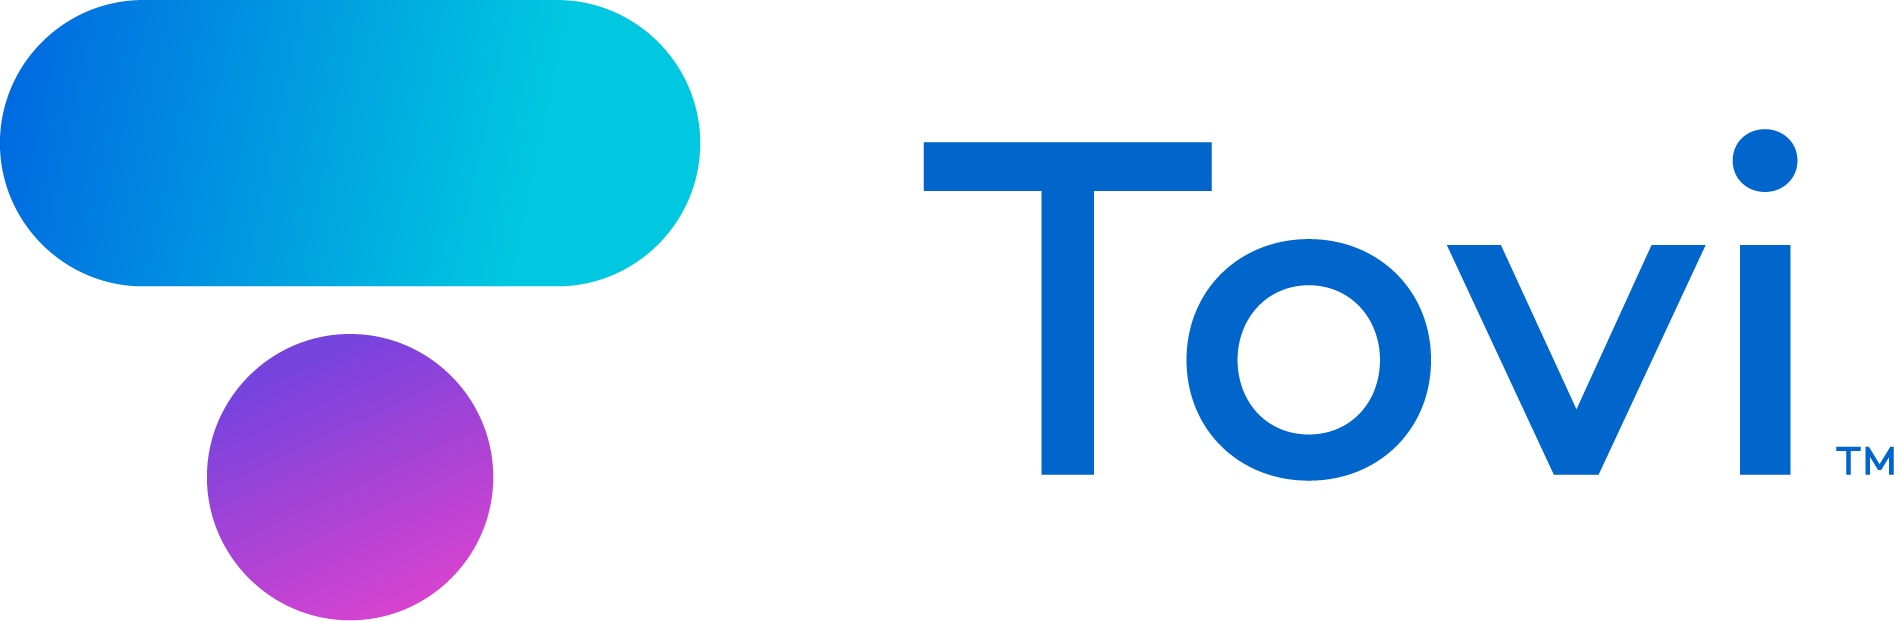 Tovi Software logo